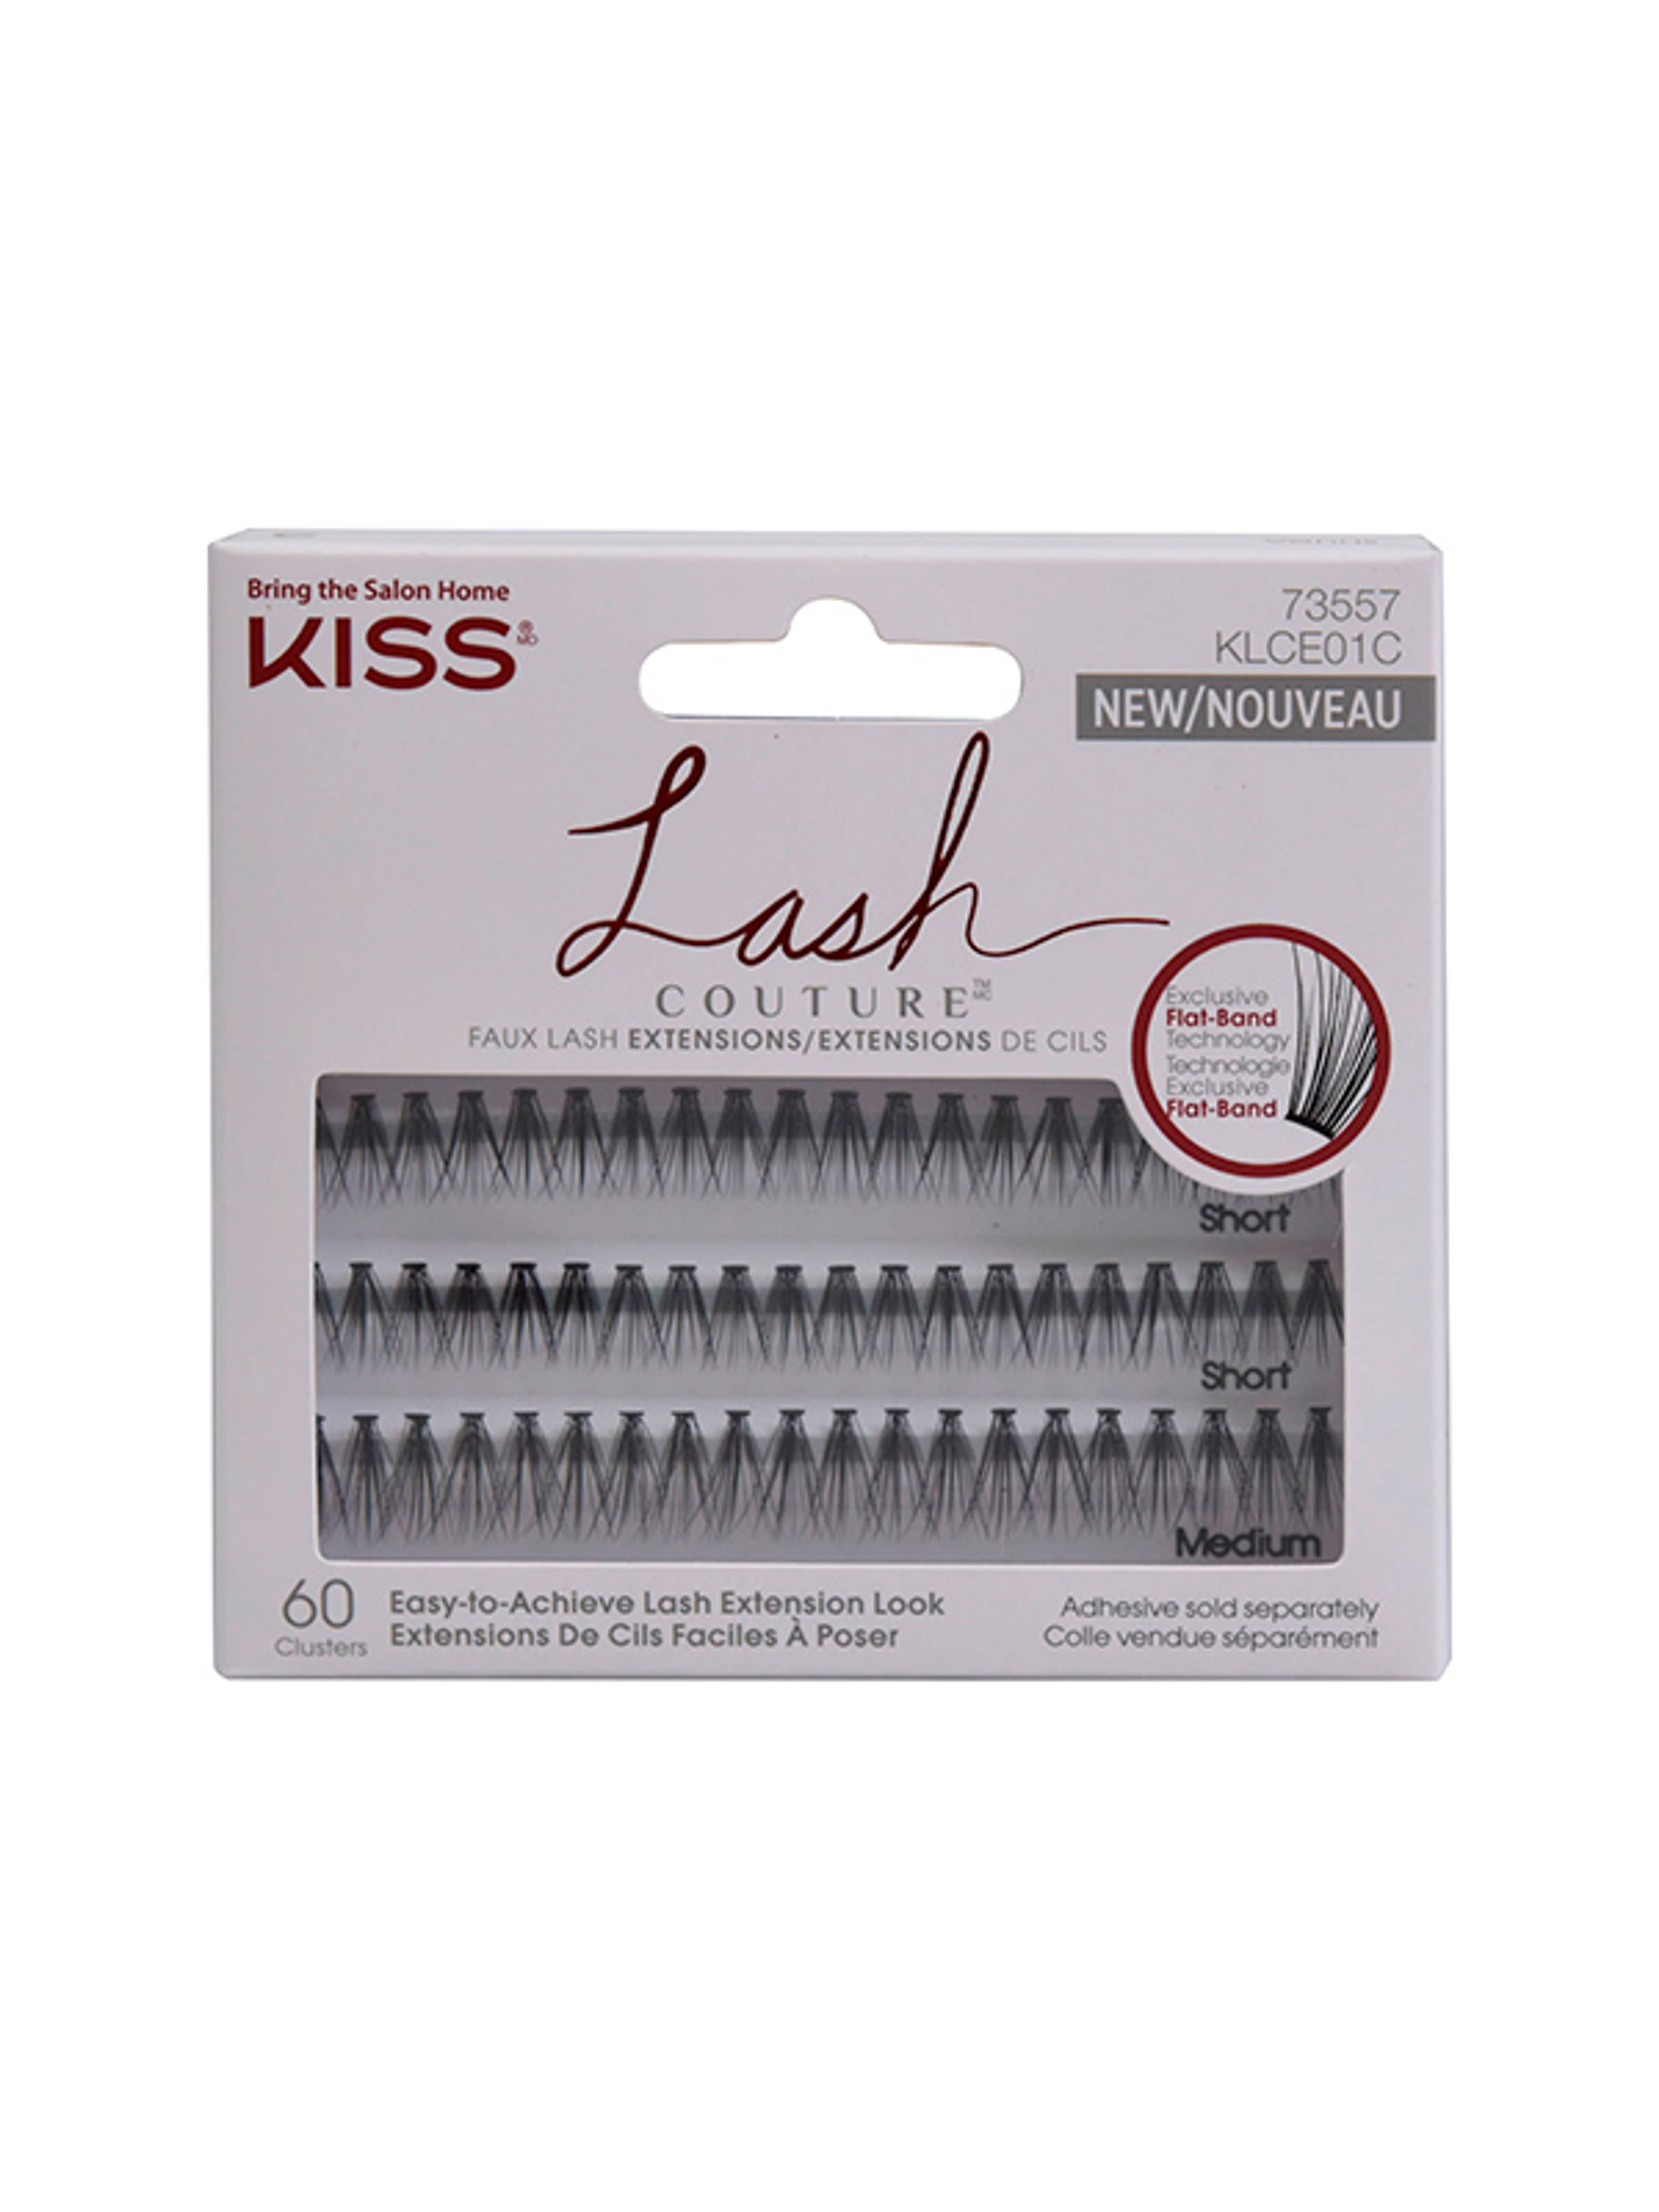 Kiss műszempilla lash couture egyedi - 1 db-1